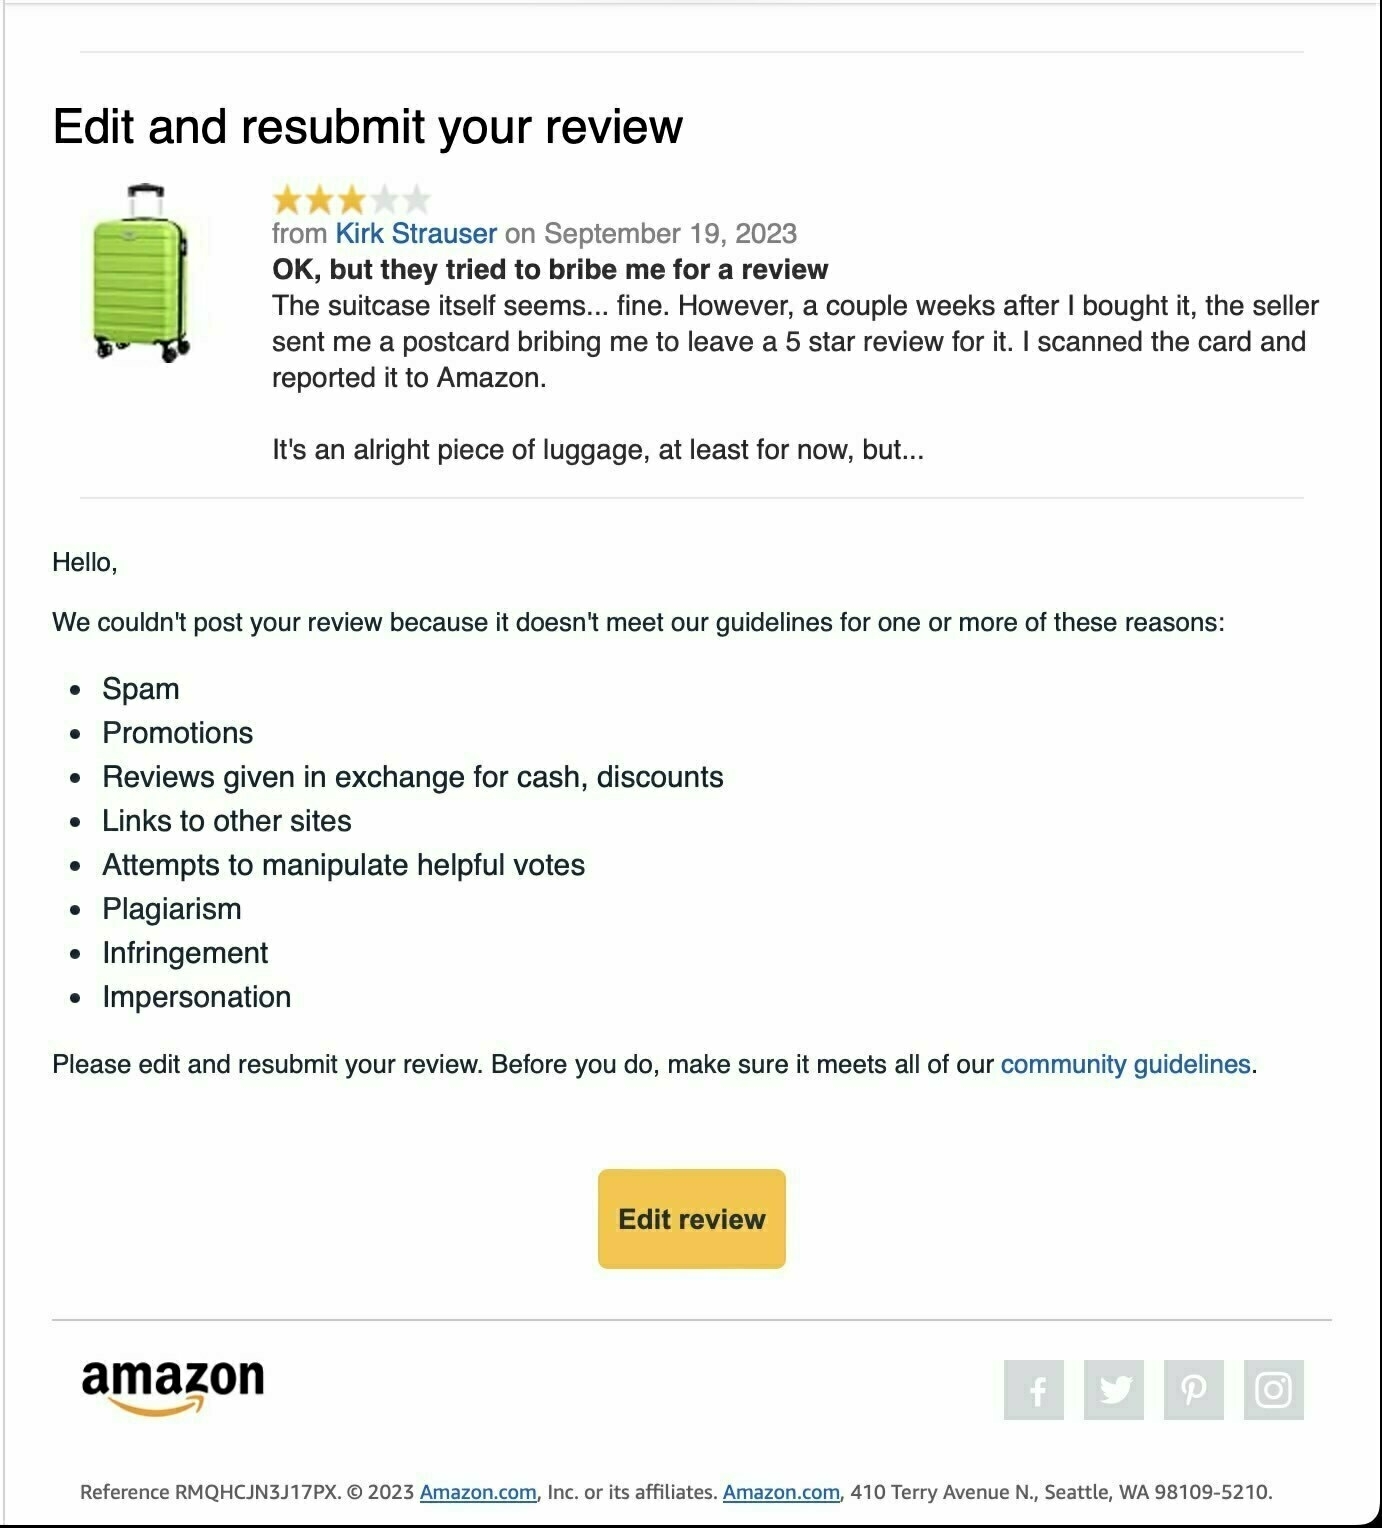 Amazon's response to my review